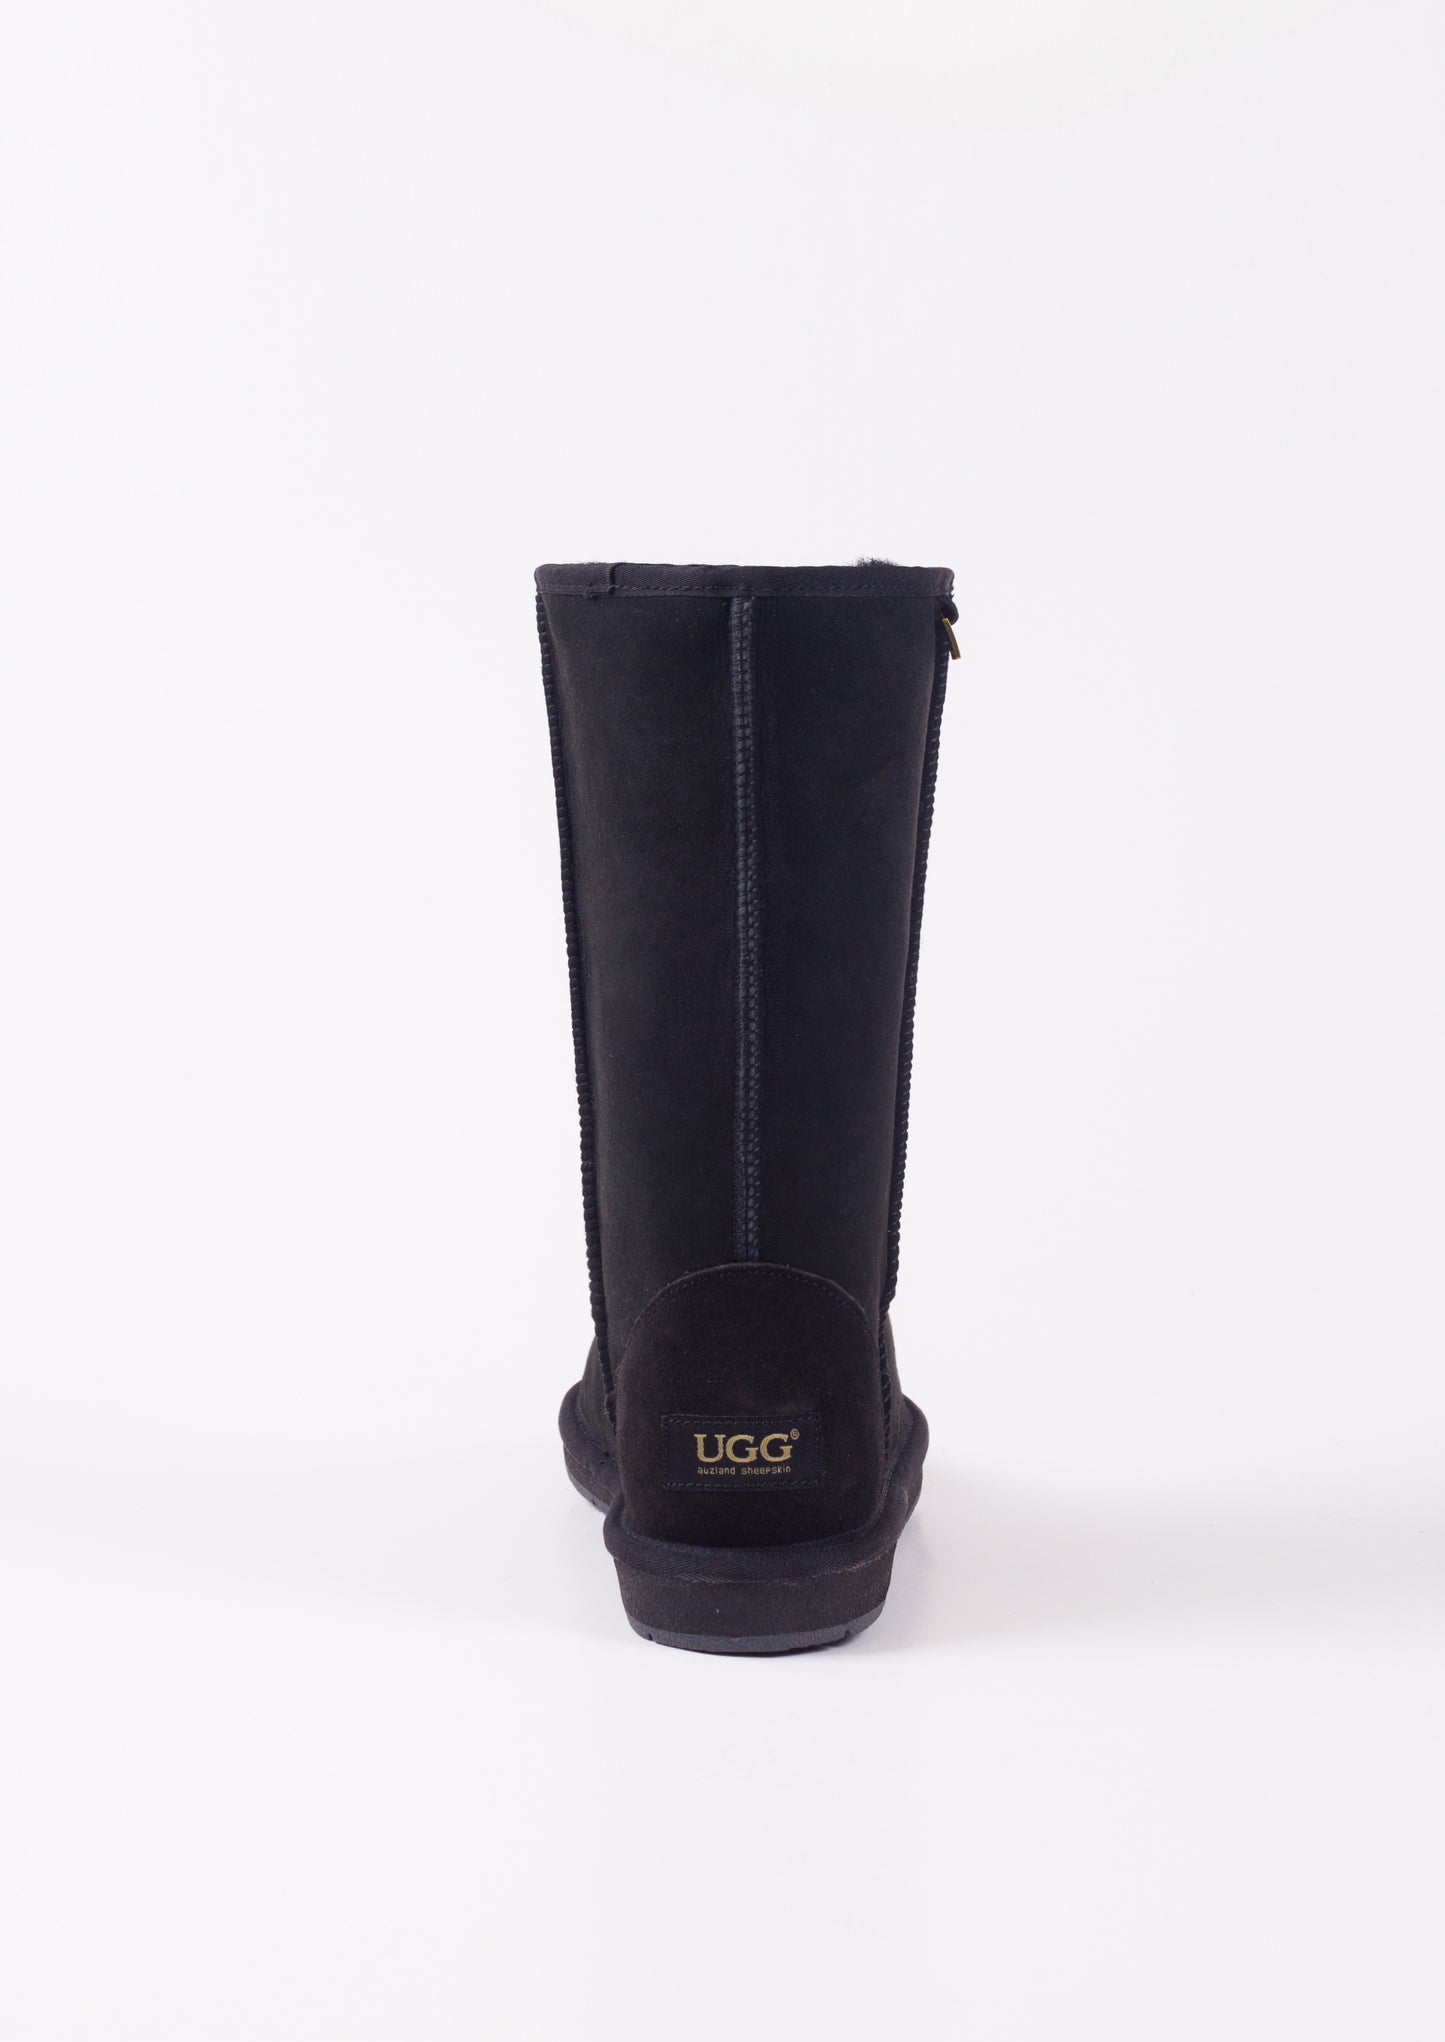 5815 Classic Tall UGG boots Australia Sheepskin